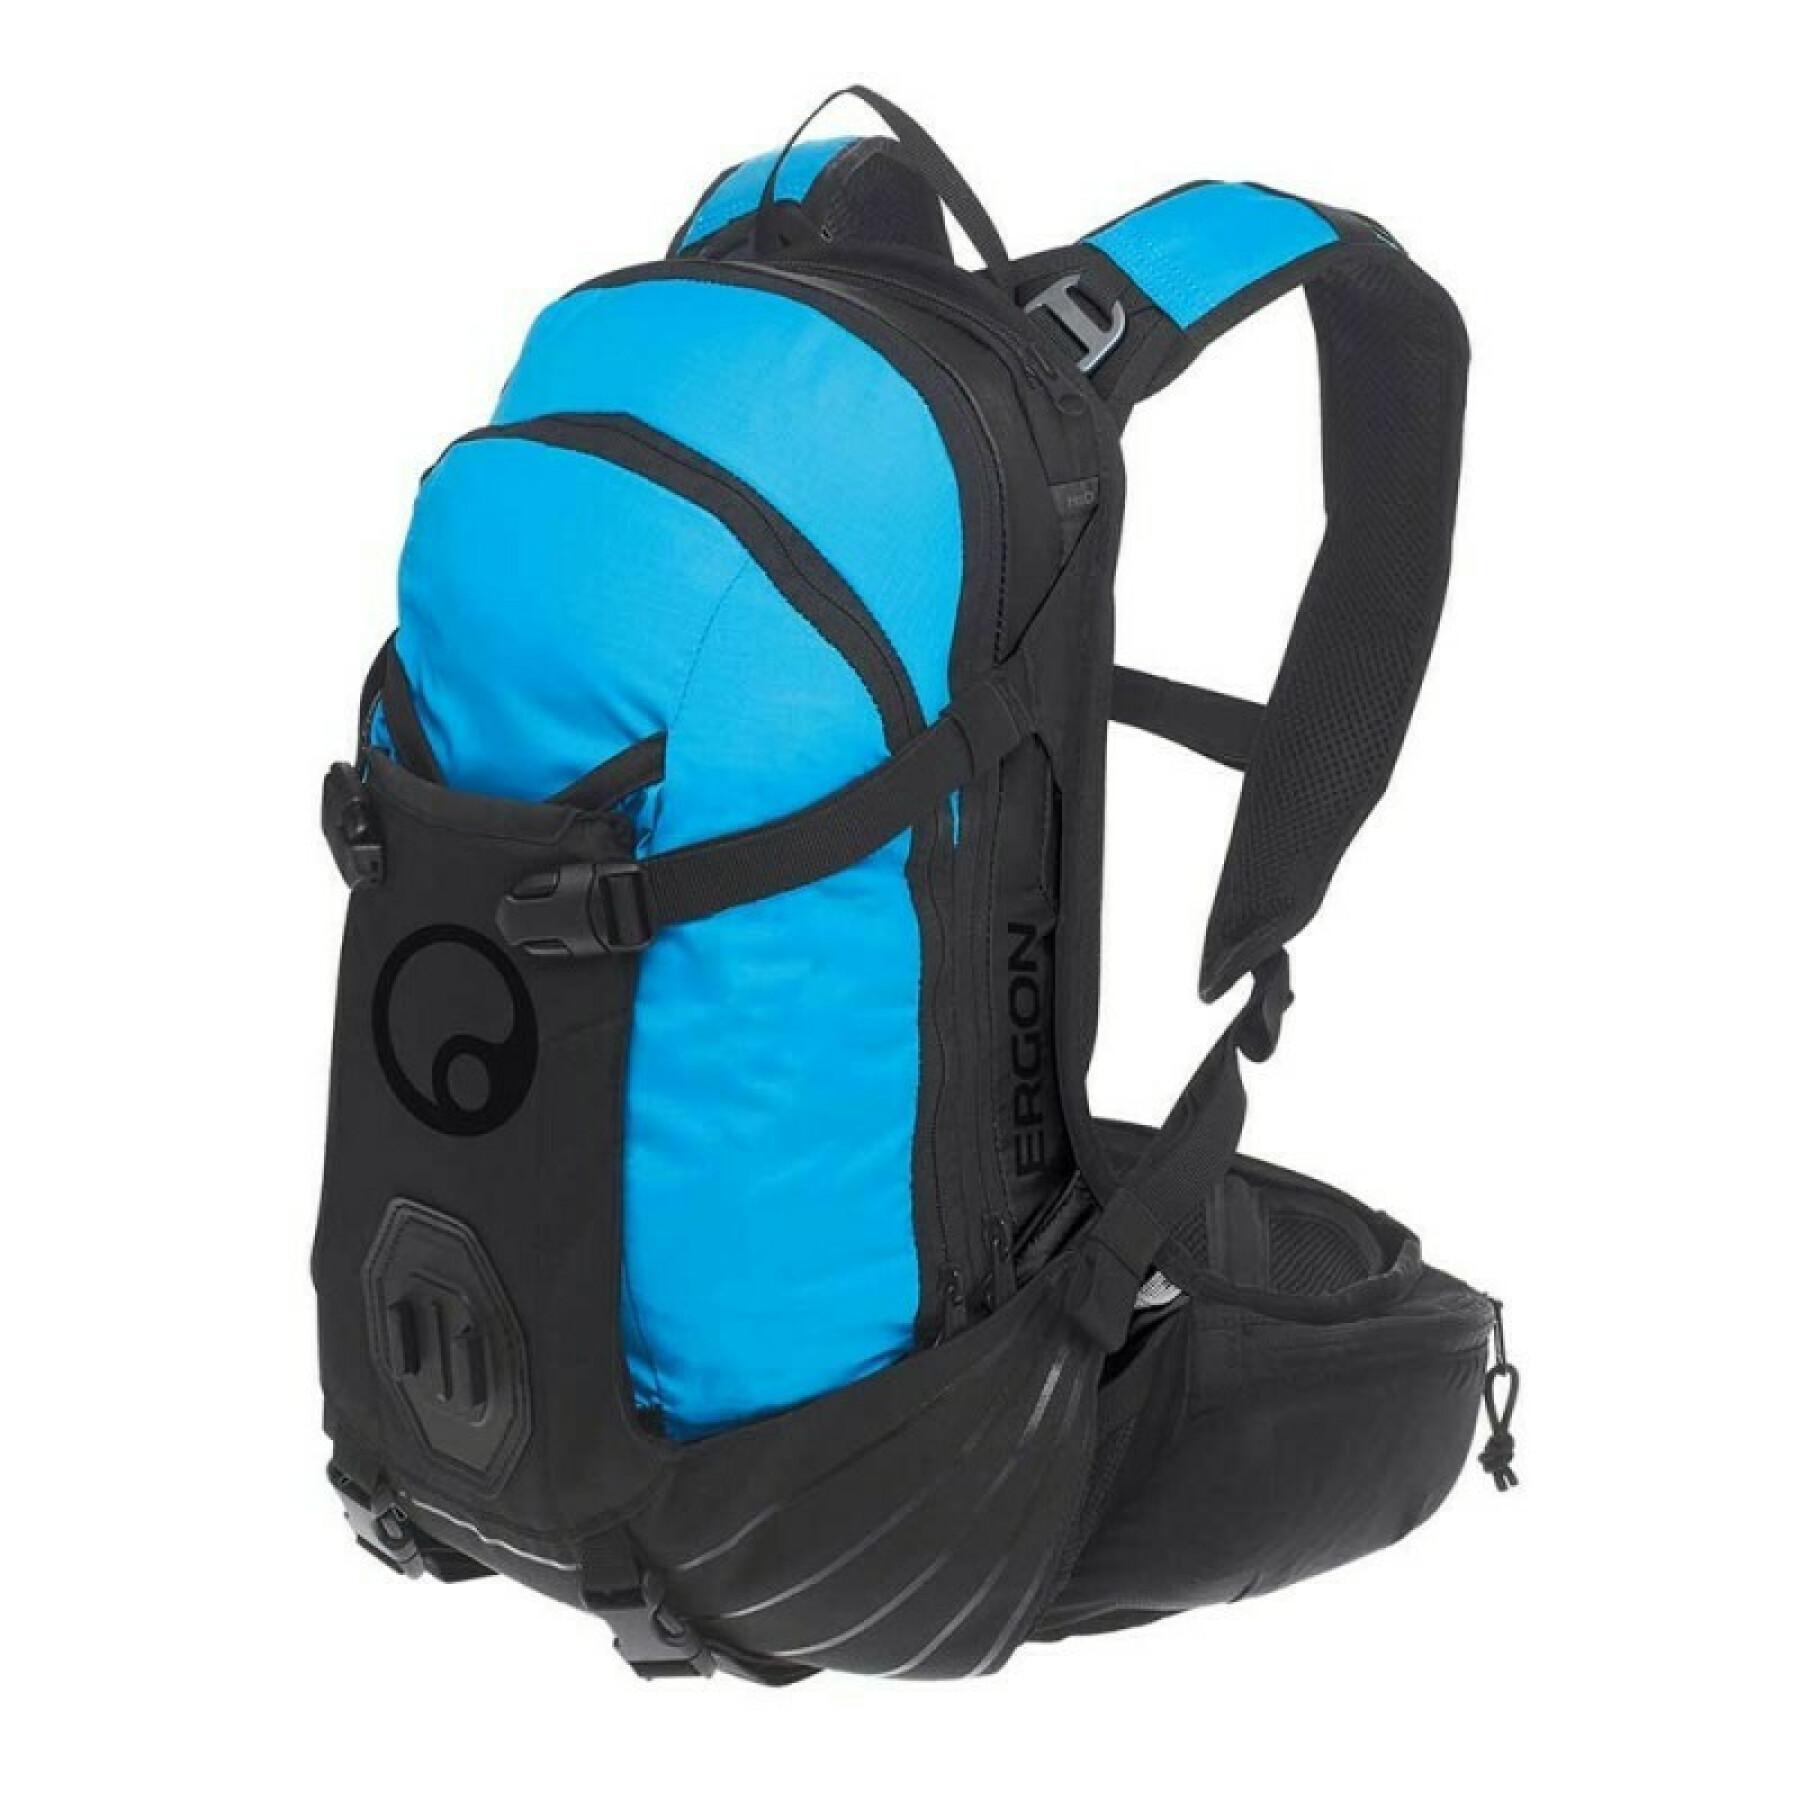 Backpack Ergon ba2